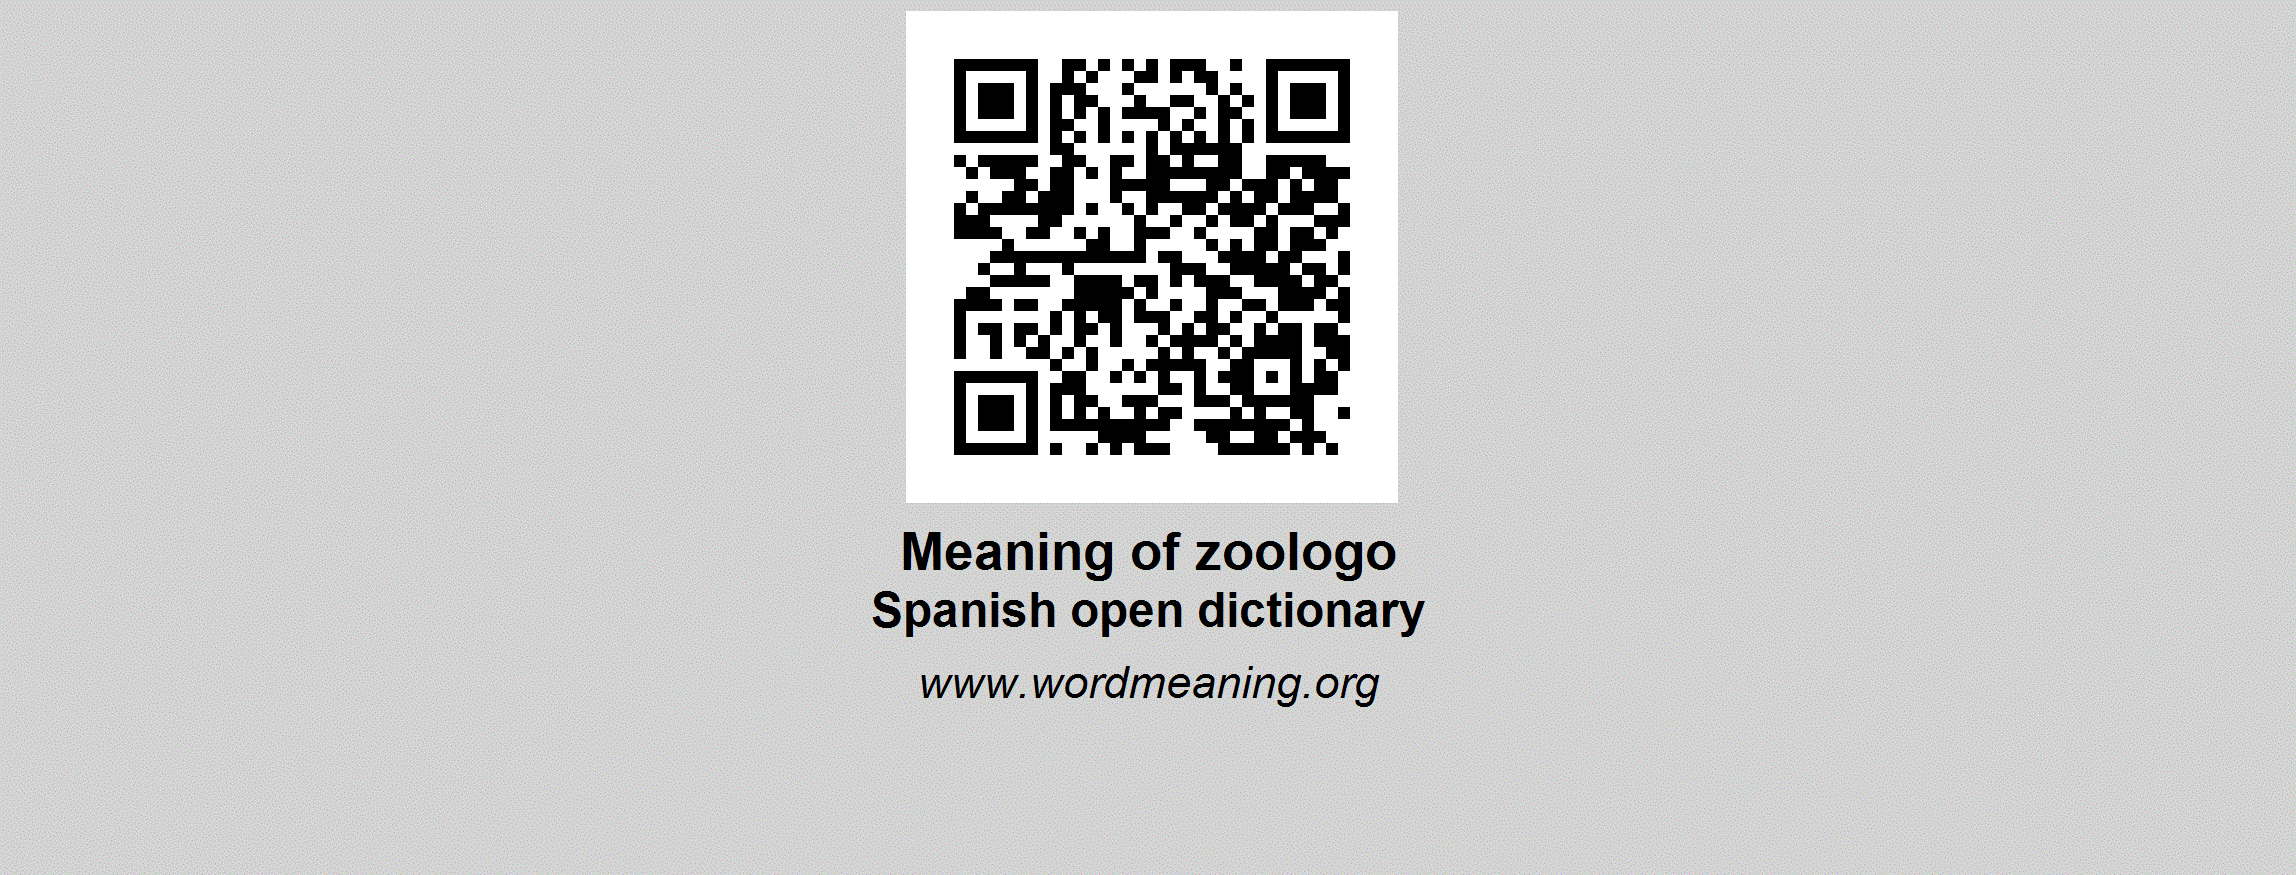 Zoologo Logo - ZOOLOGO open dictionary